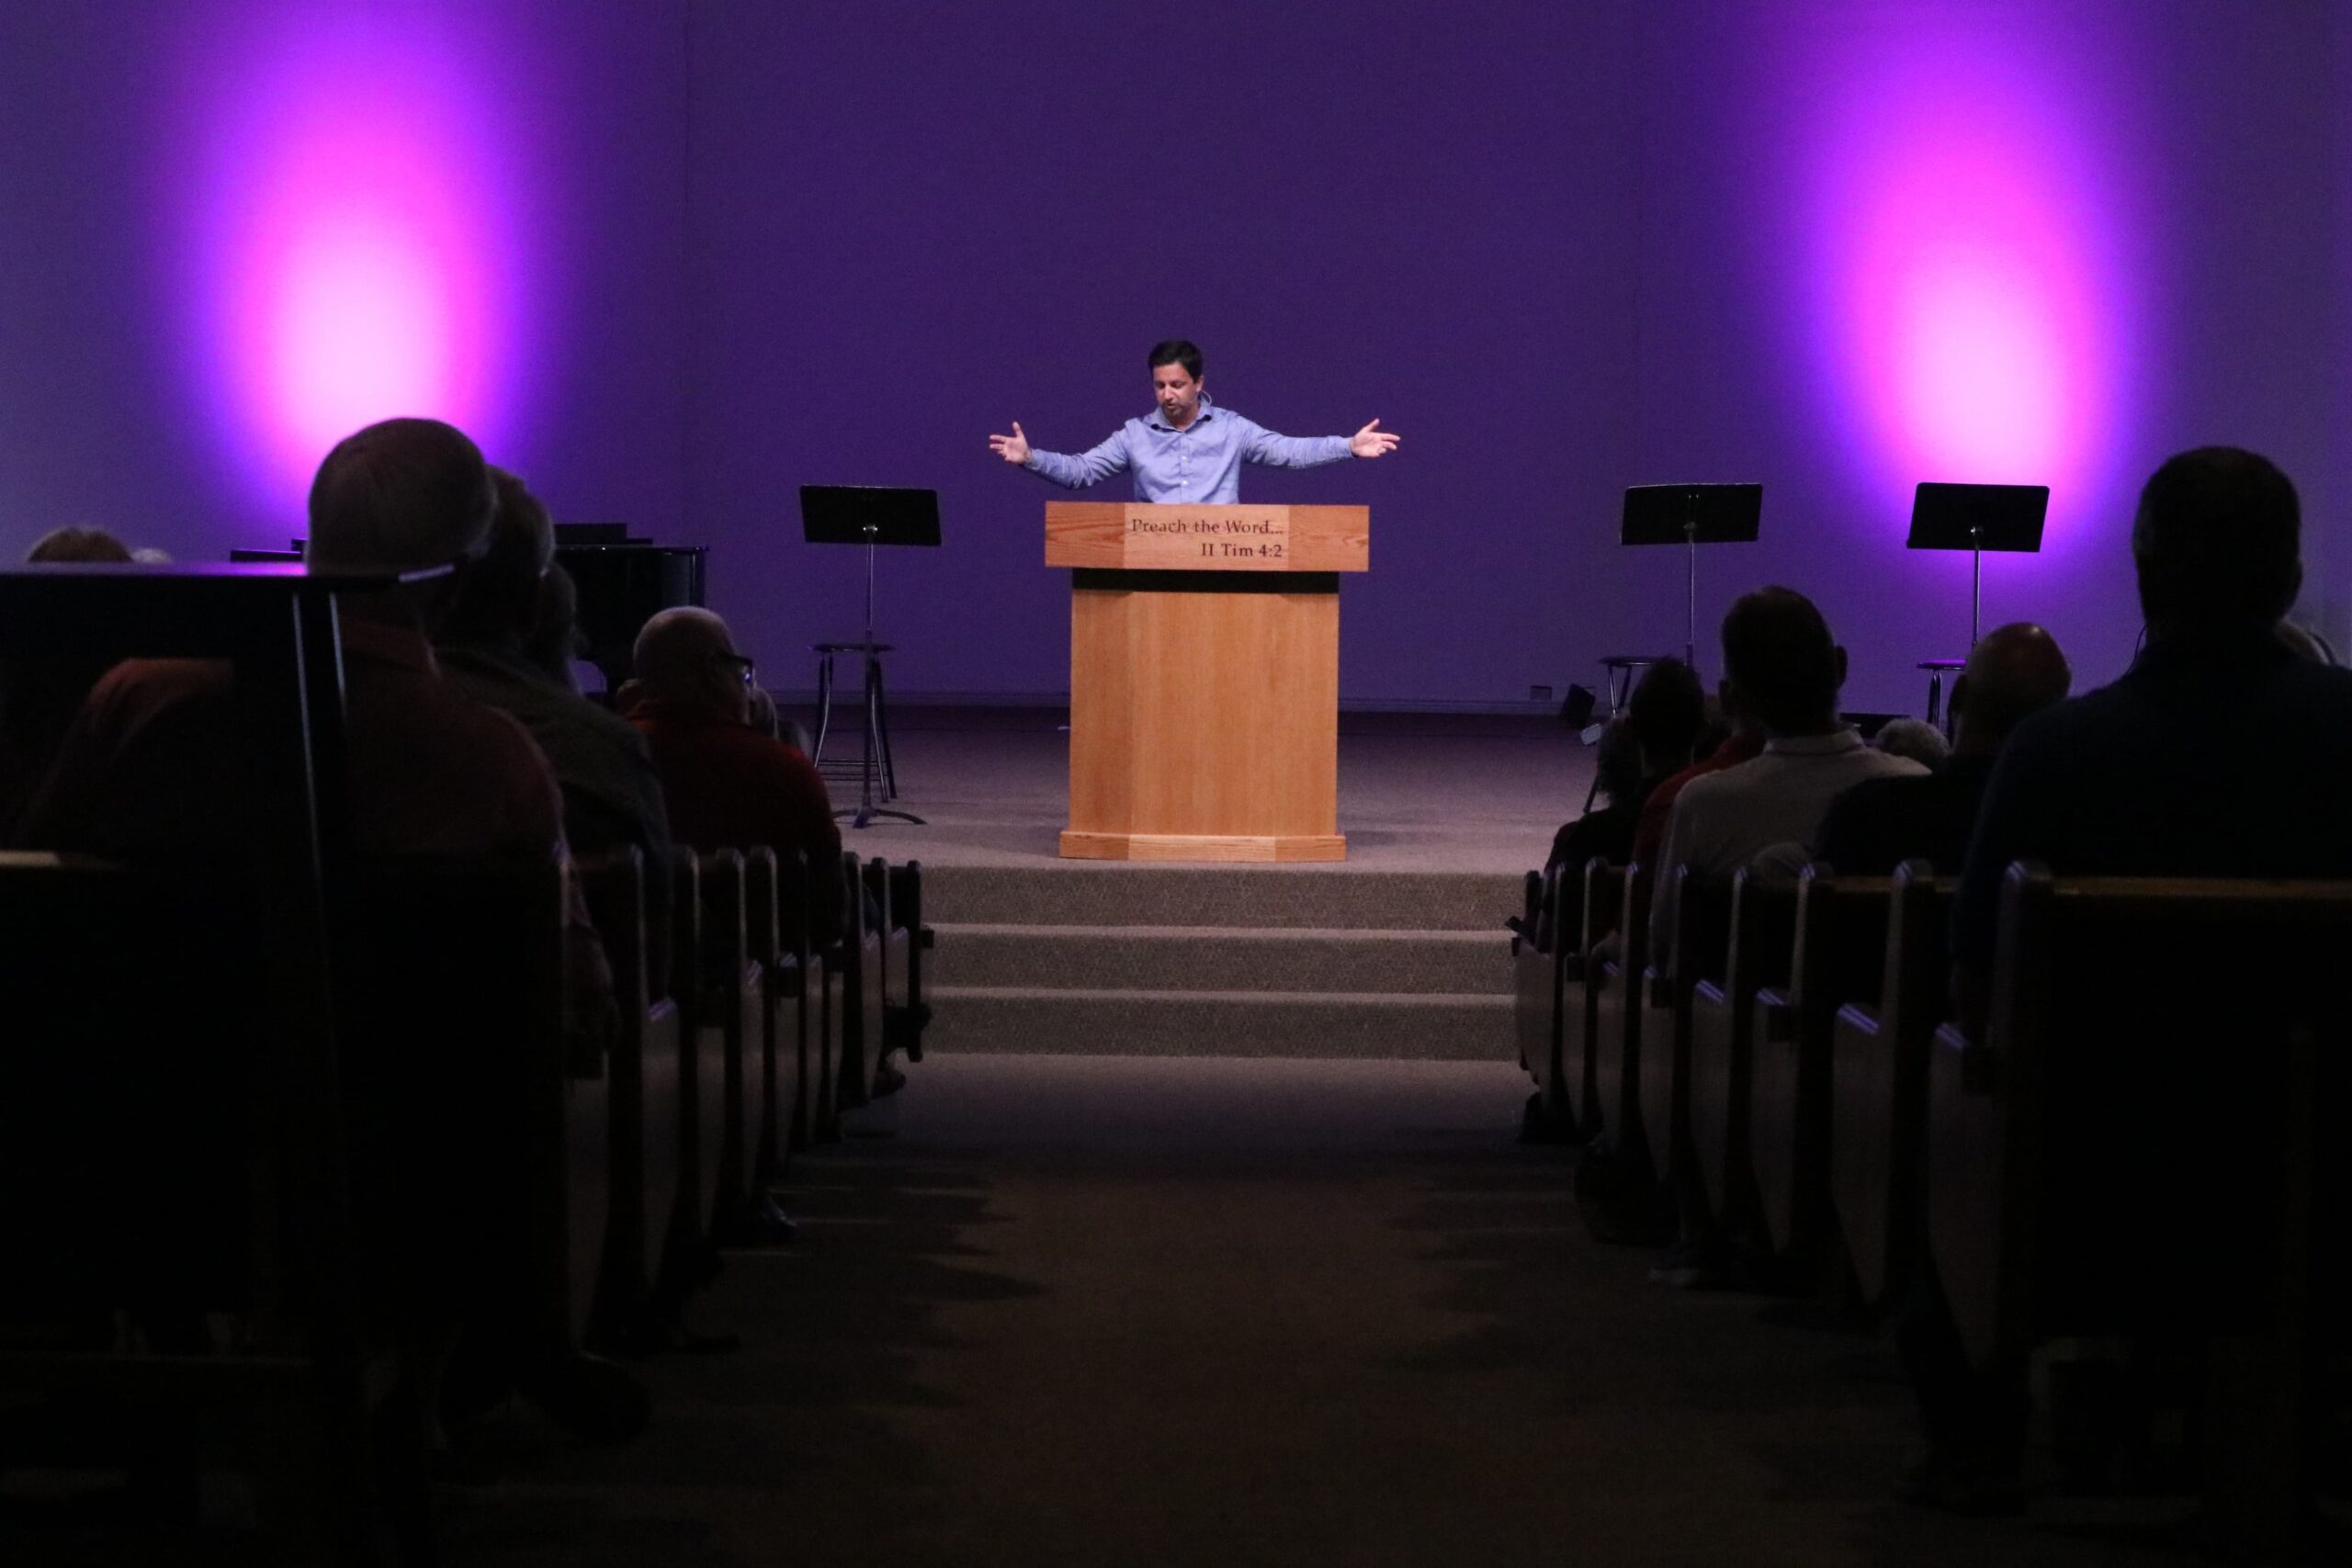 Pastor Rob Preaching